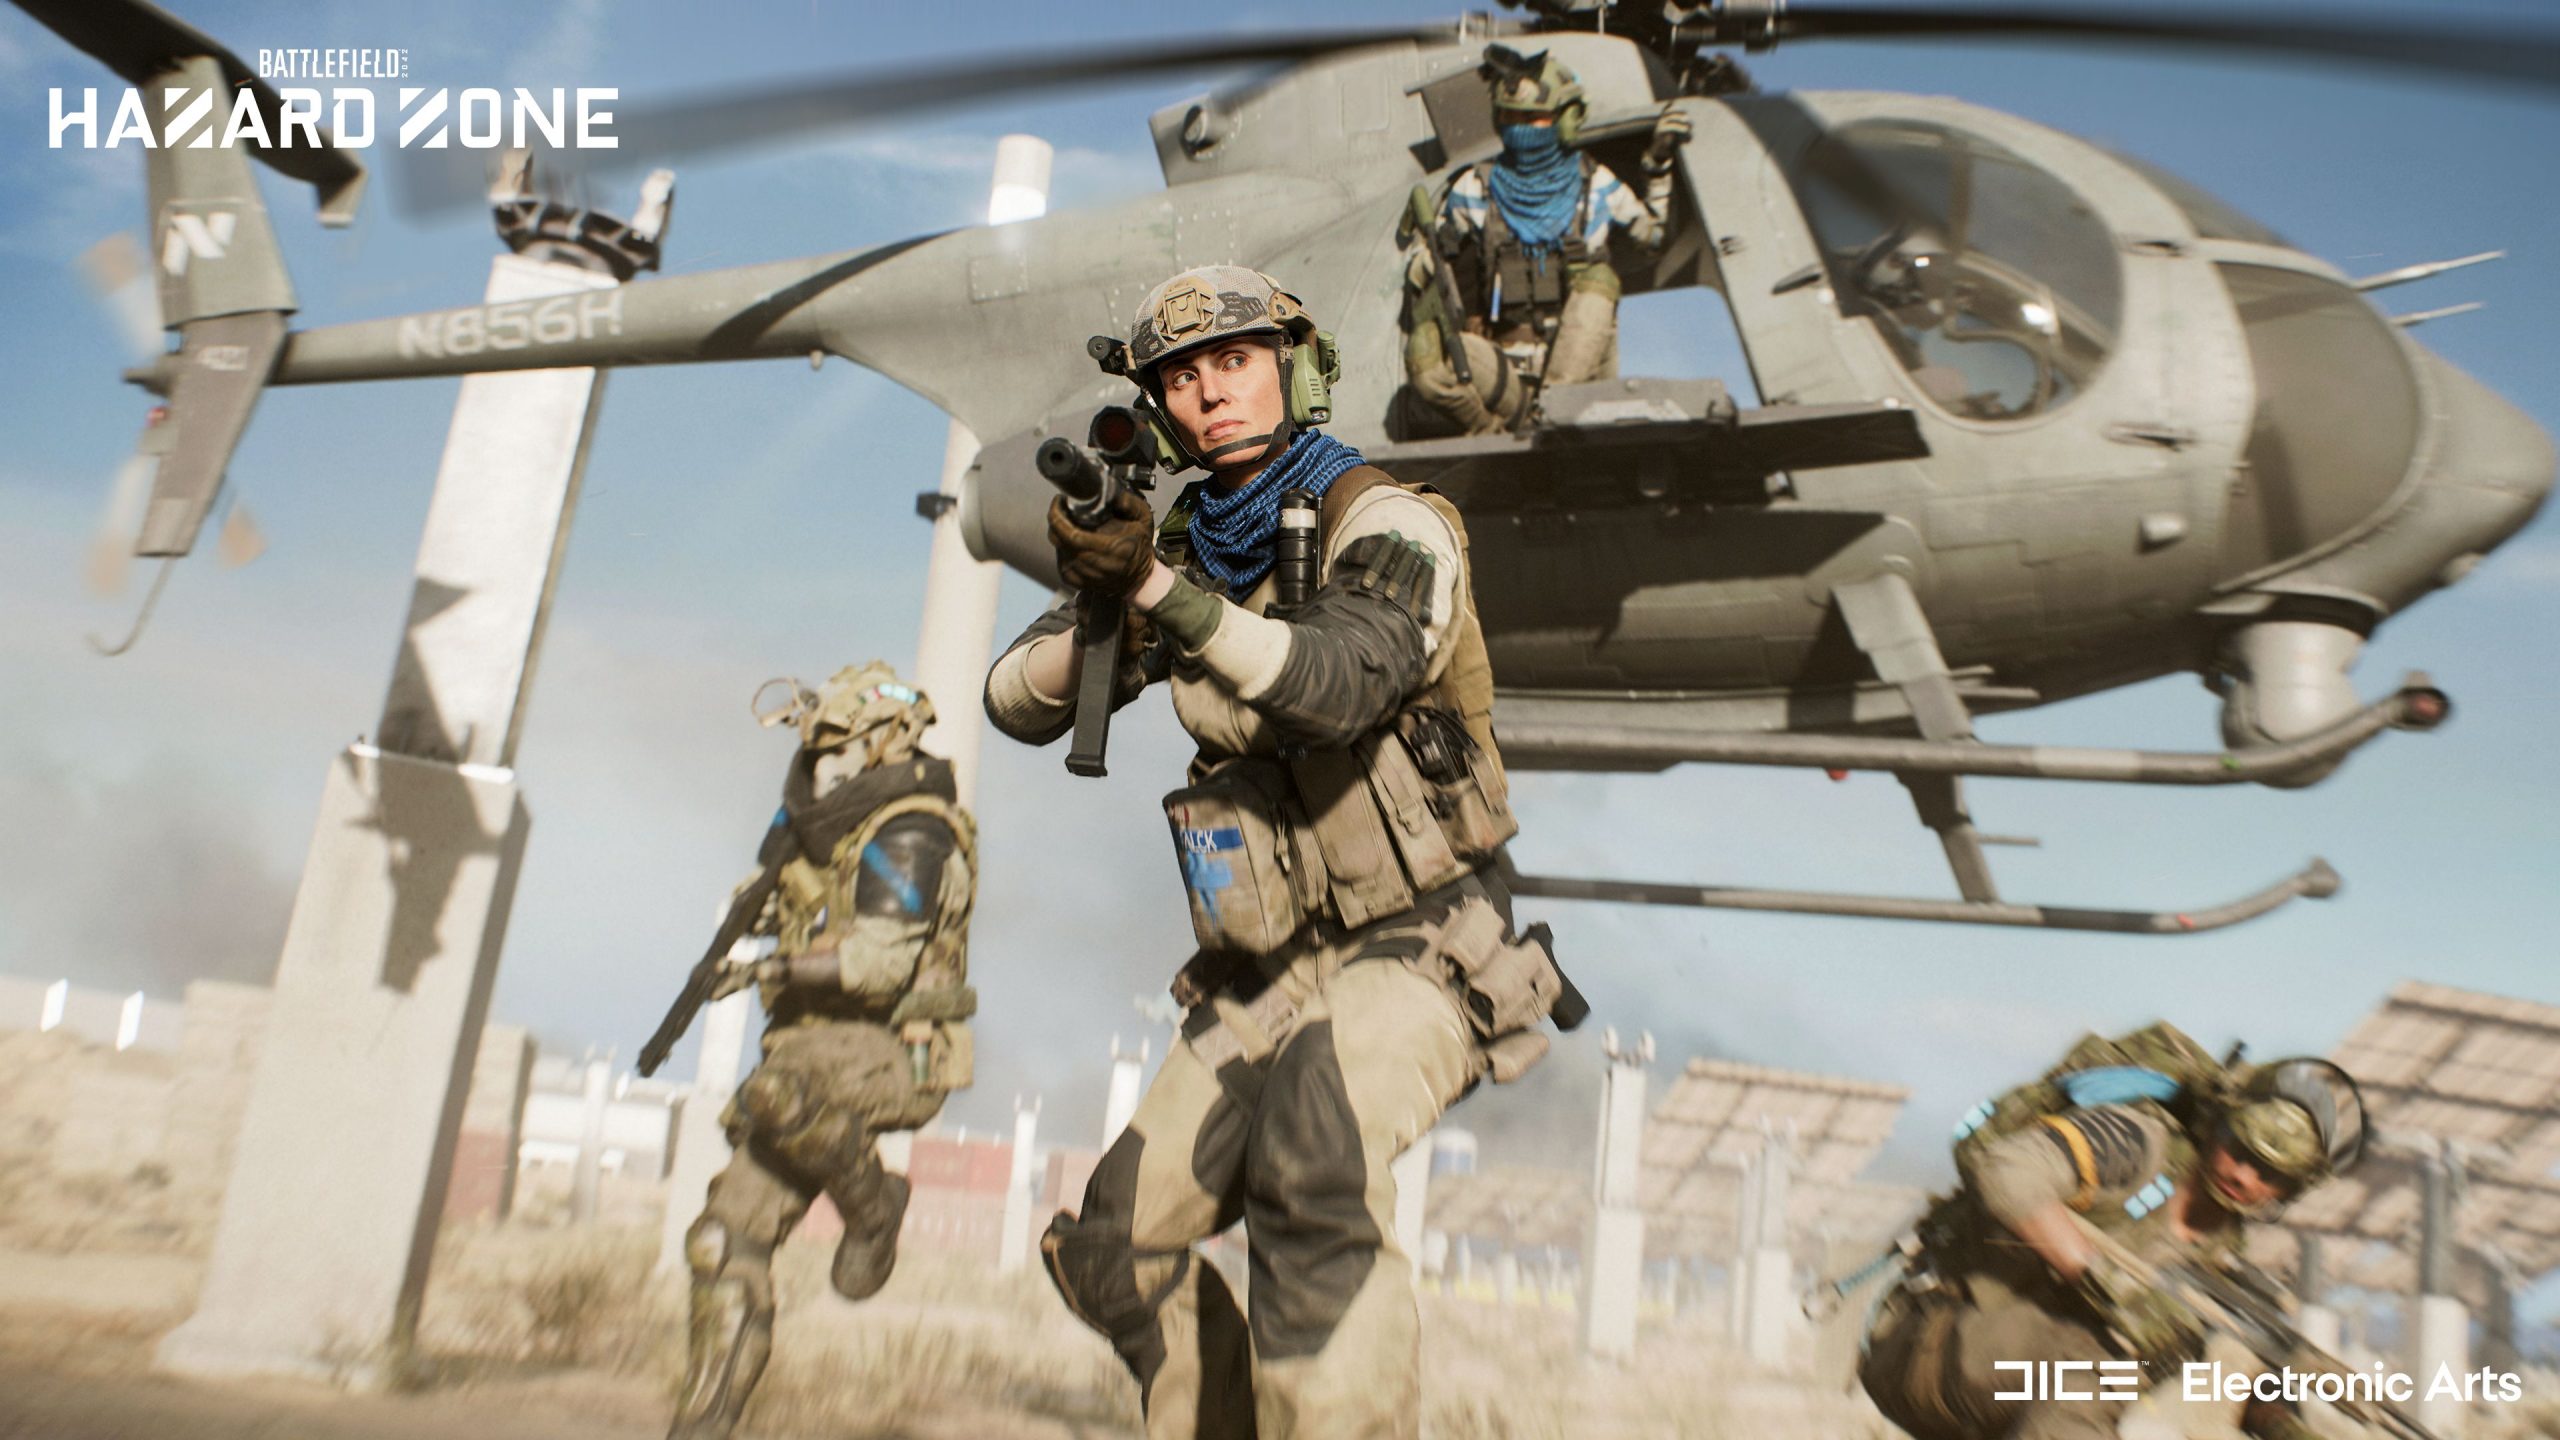 Captura de pantalla de Battlefield 2042 Hard Zone